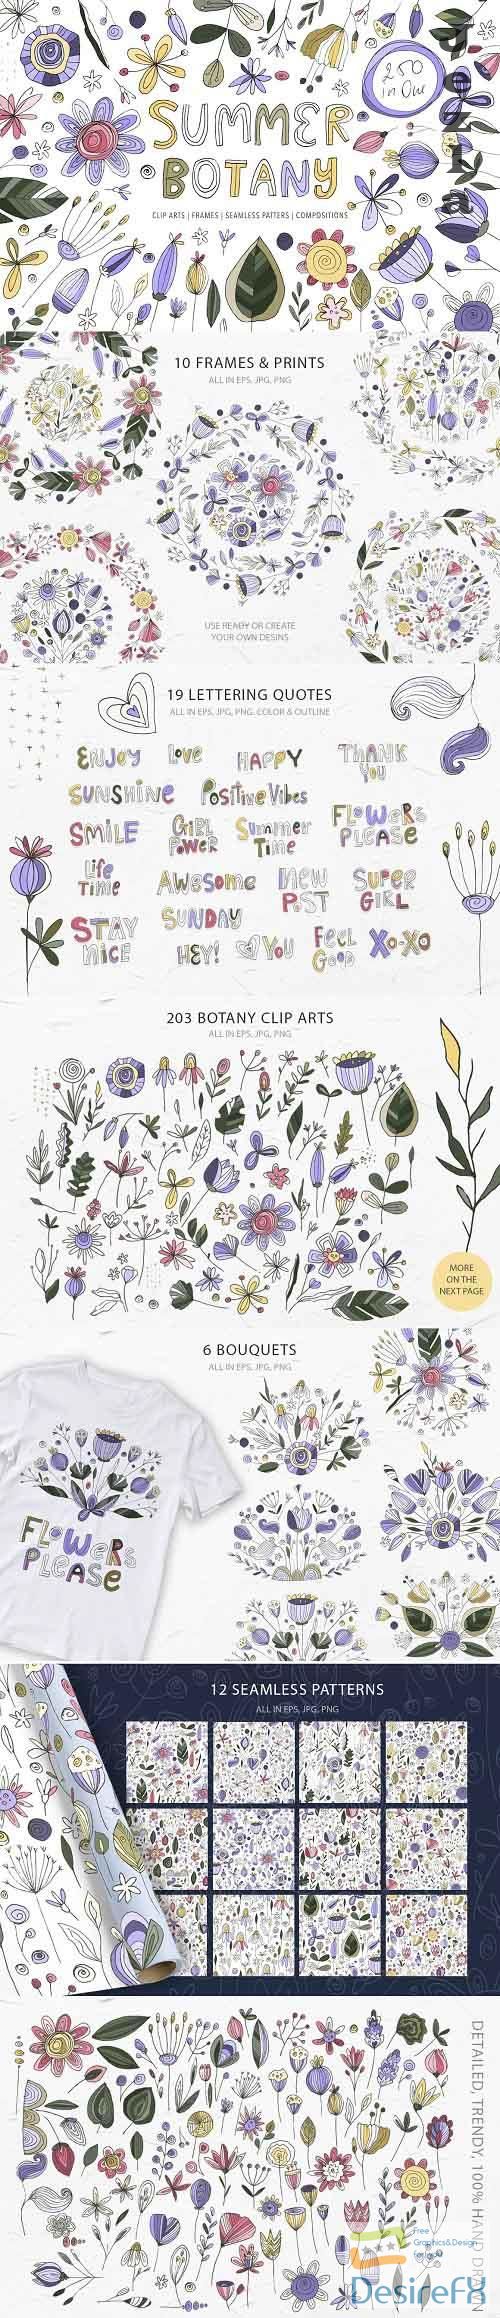 Summer Botany. Floral Graphic Pack - 5149907